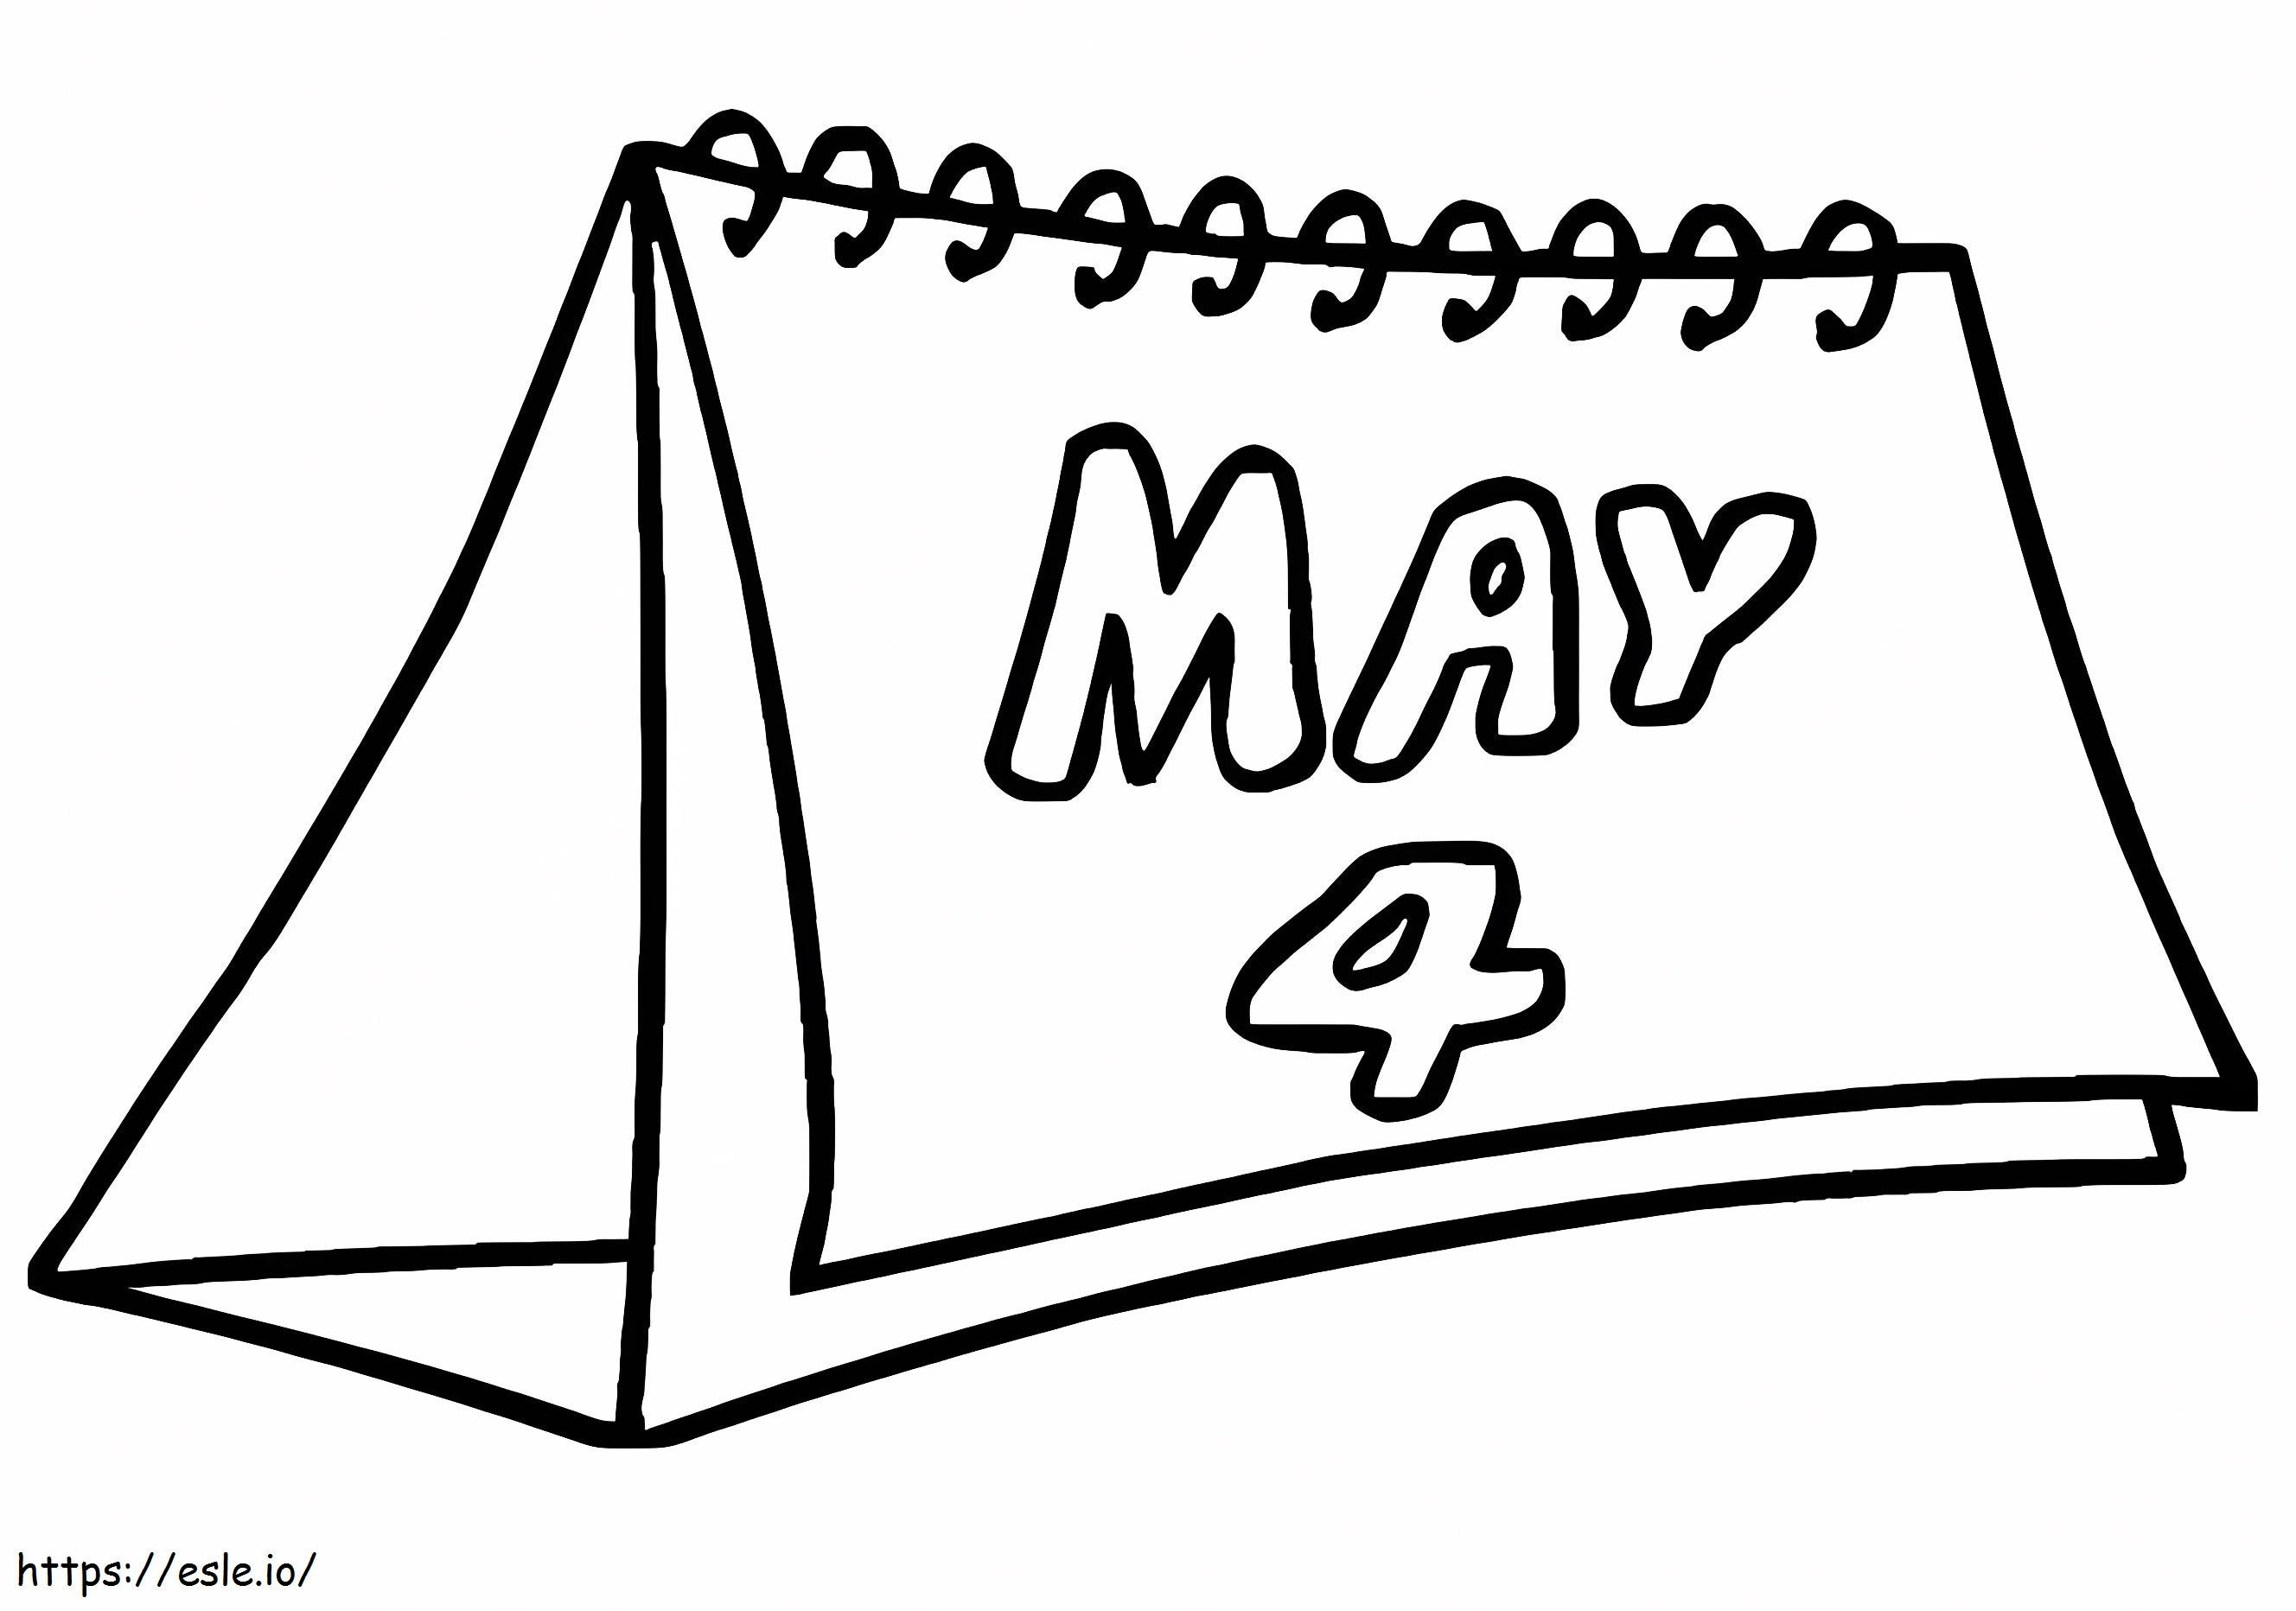 Kalendarz 4 maja kolorowanka